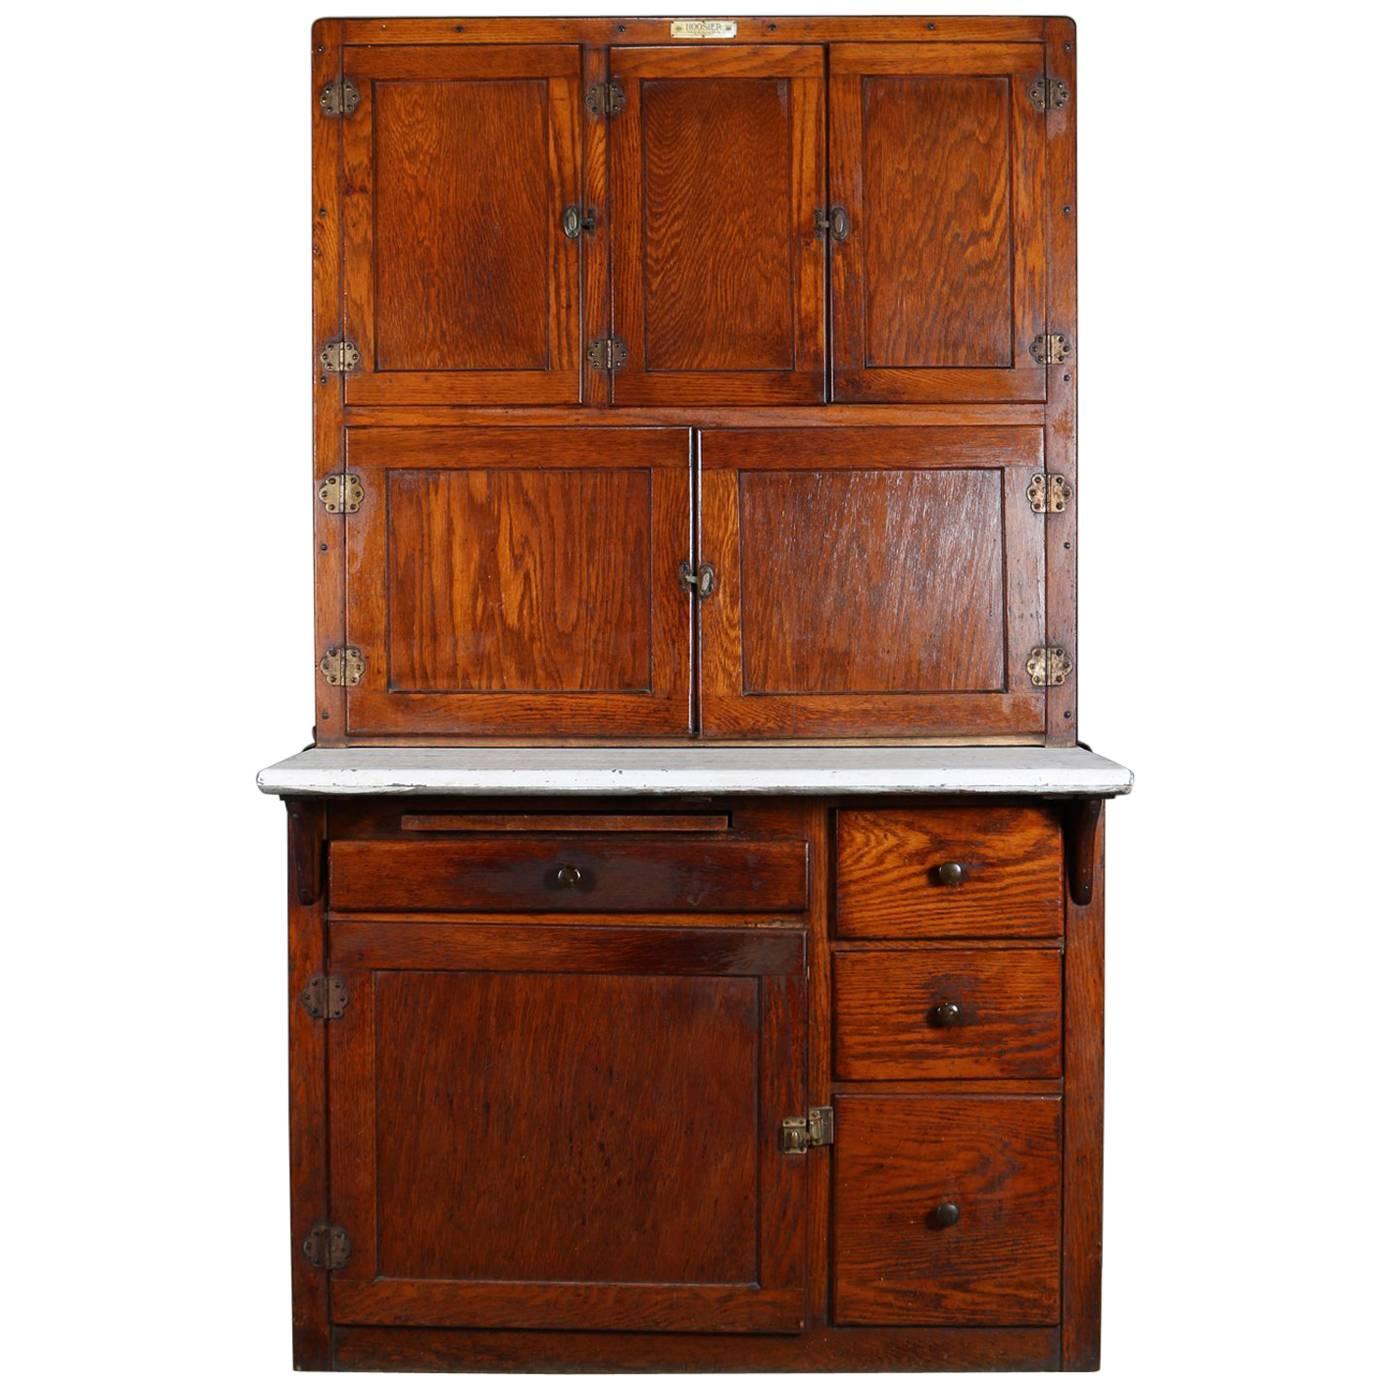 Antique Oak and Enamel Authentic Indiana Hoosier Cabinet, circa 1910